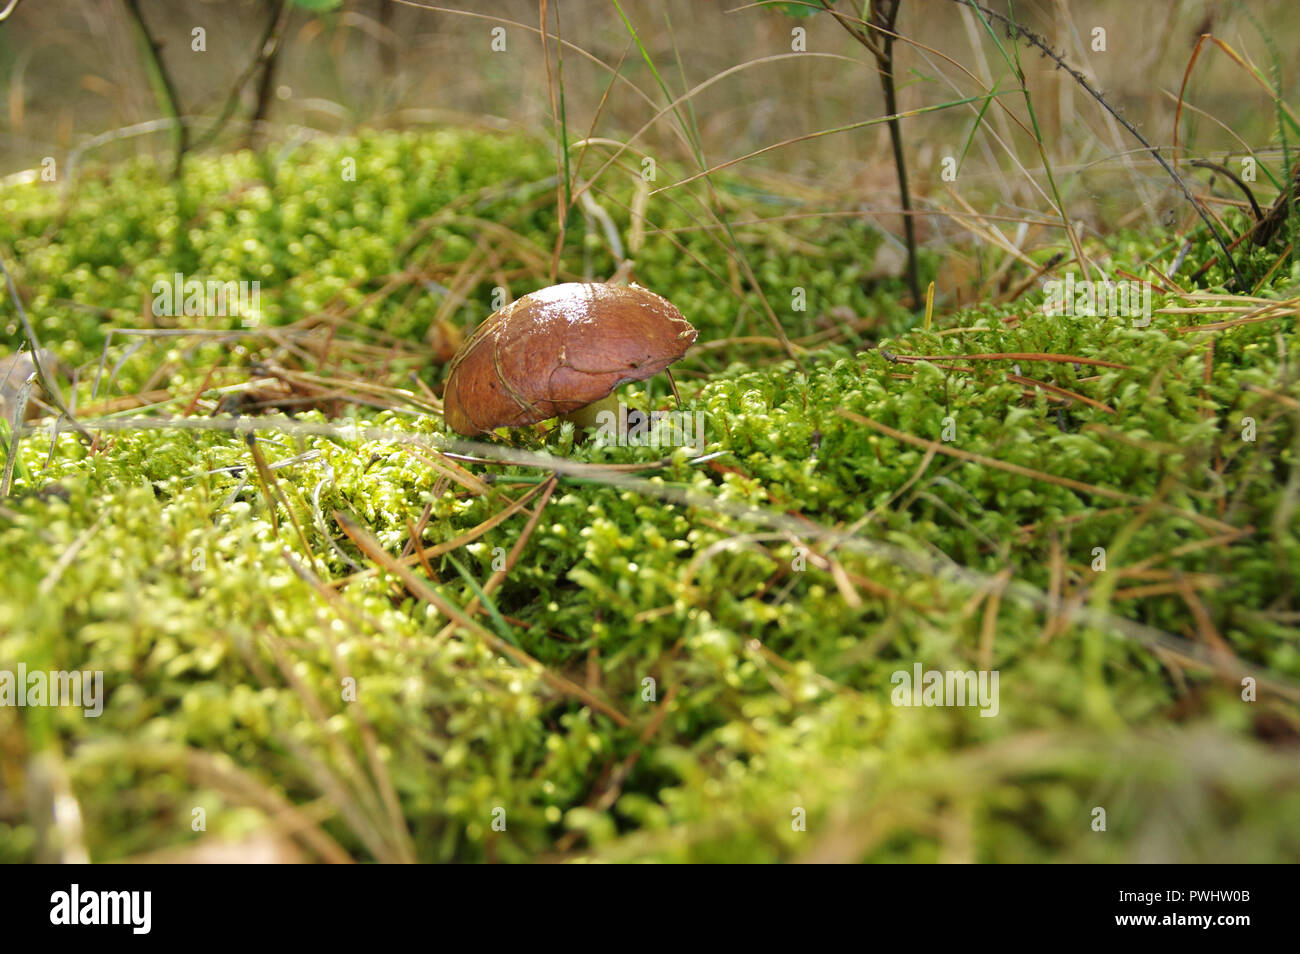 Slippery jack mushrooms (suillus) in natural environment. Eatable fungus on undergrowth. Stock Photo